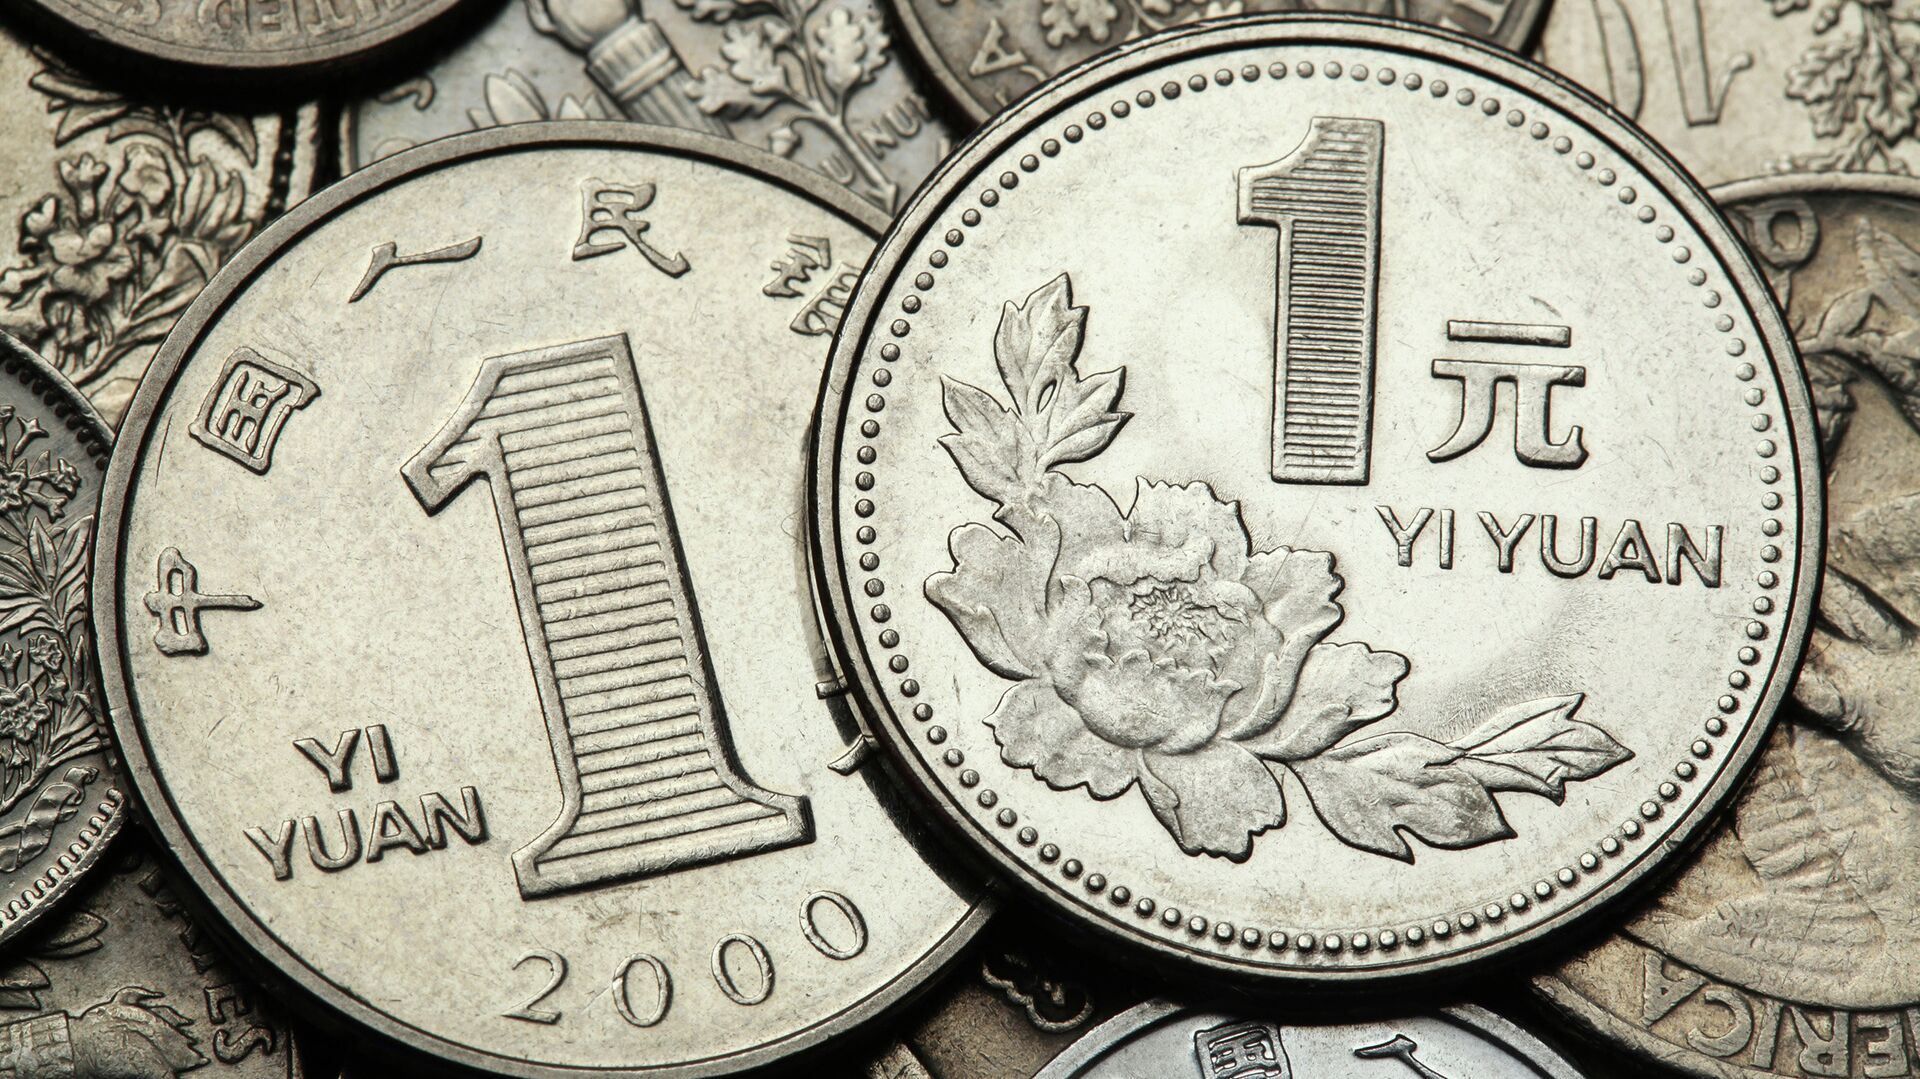 Монеты в 1 юань - РИА Новости, 1920, 02.04.2021